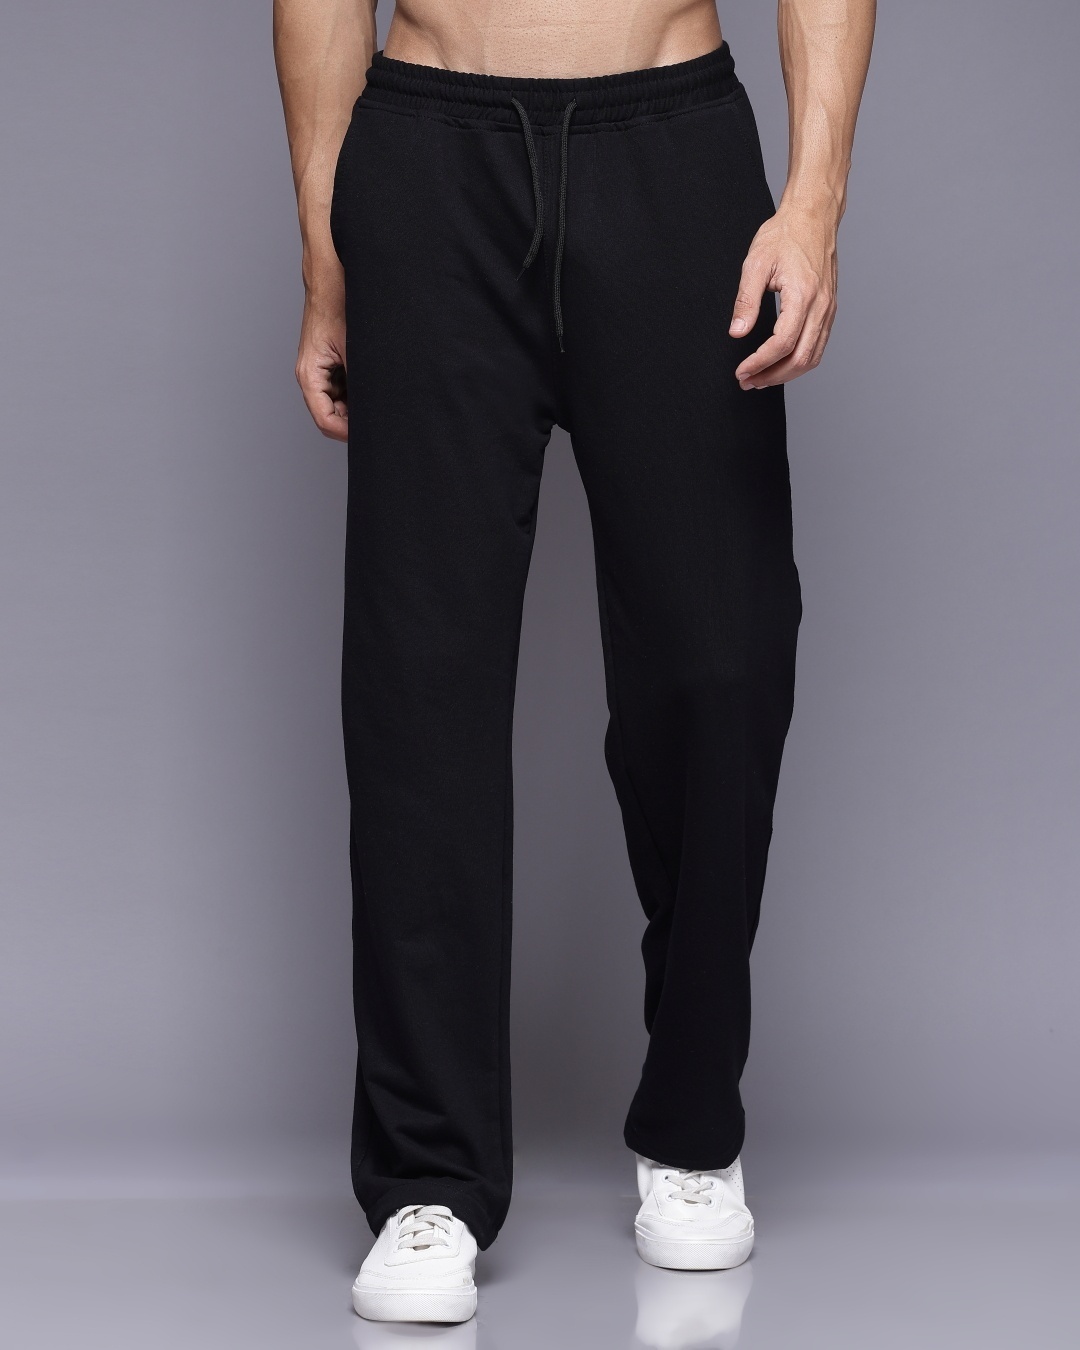 Buy Men's Black Relaxed Fit Track Pants Online at Bewakoof